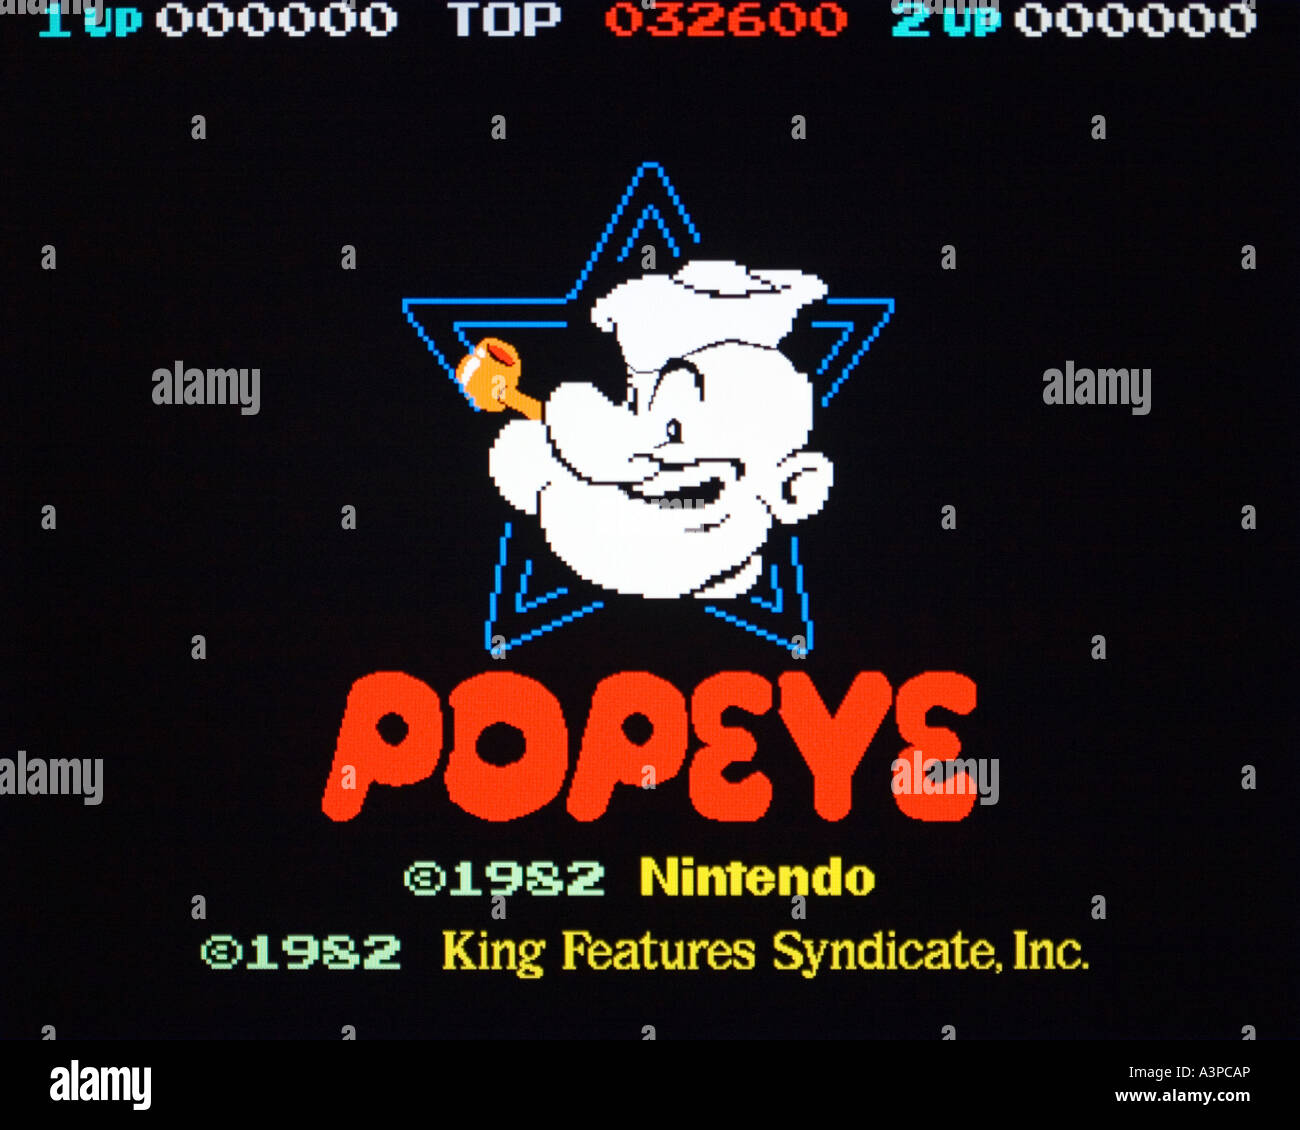 Popeye Nintendo King Features Syndicate Inc 1982 vintage videojuego arcade captura de pantalla sólo para uso editorial Foto de stock